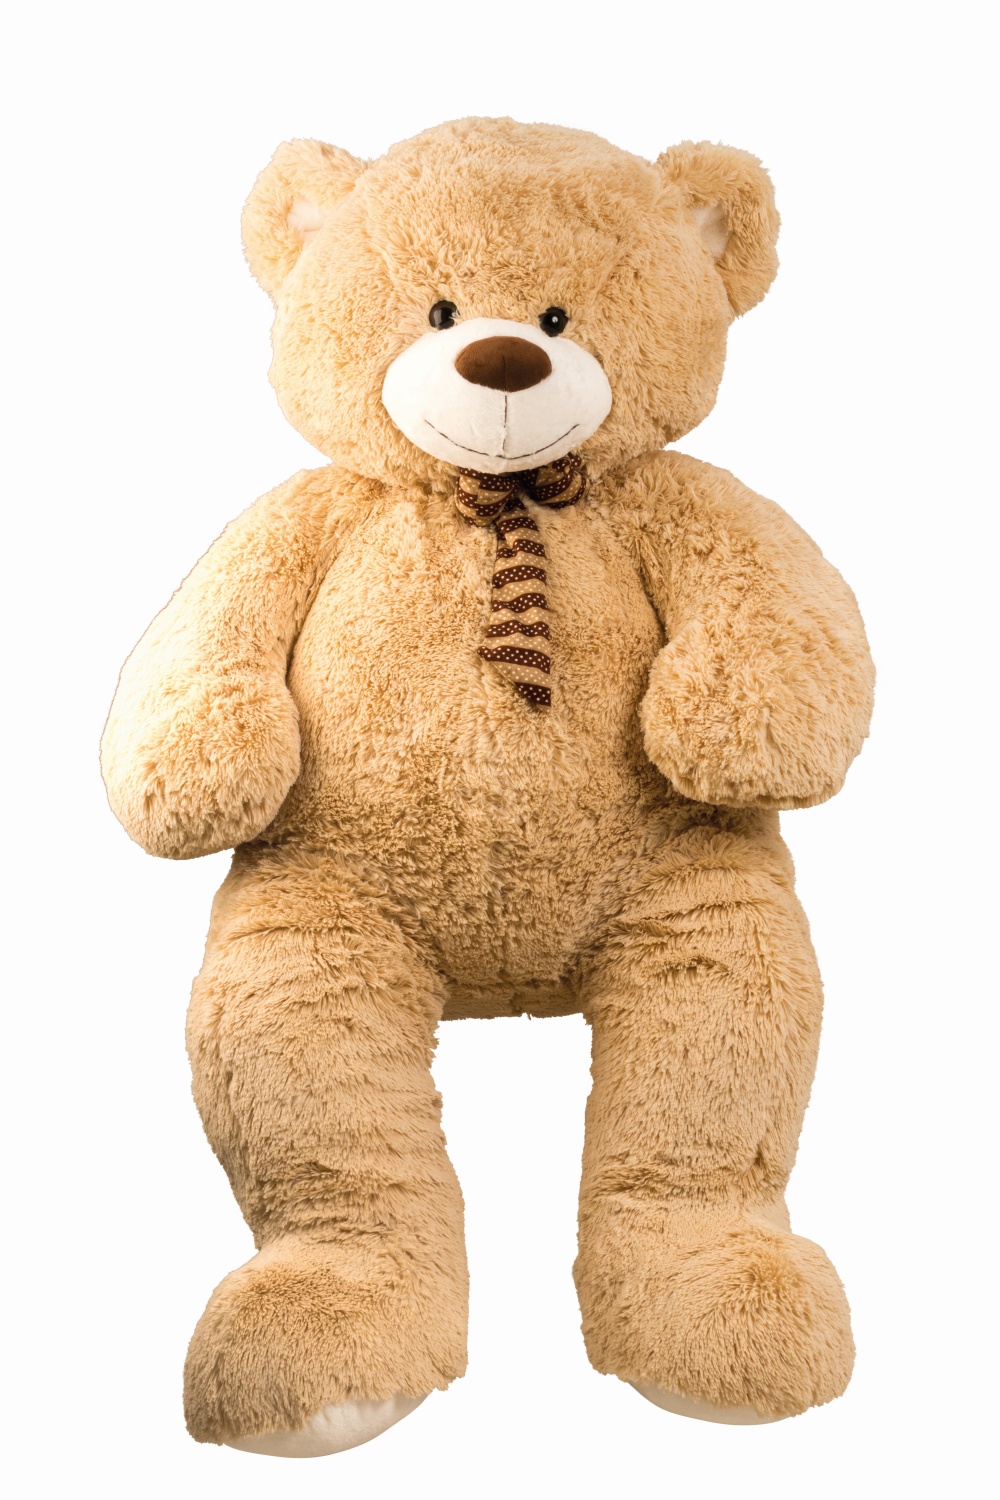 Teddybär XXL Riesen Teddy Kuscheltier Plüschbär Stofftier Bär 100cm Geschenk 